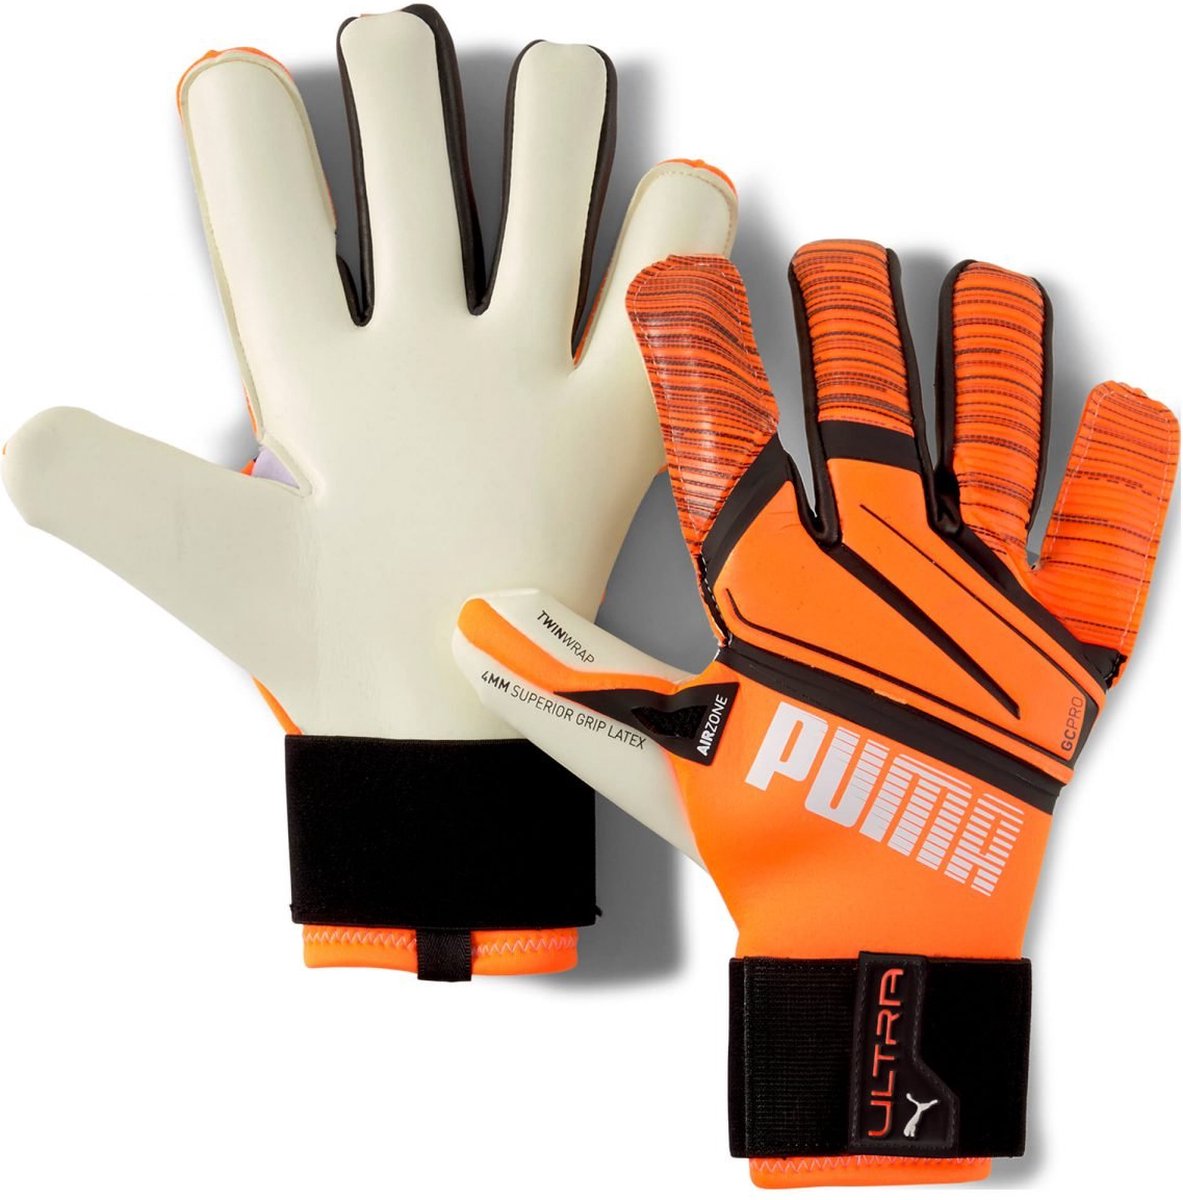 Puma Ultra Grip 1 Hybrid Pro Orange/Black/White Keepershandschoenen - Maat 10